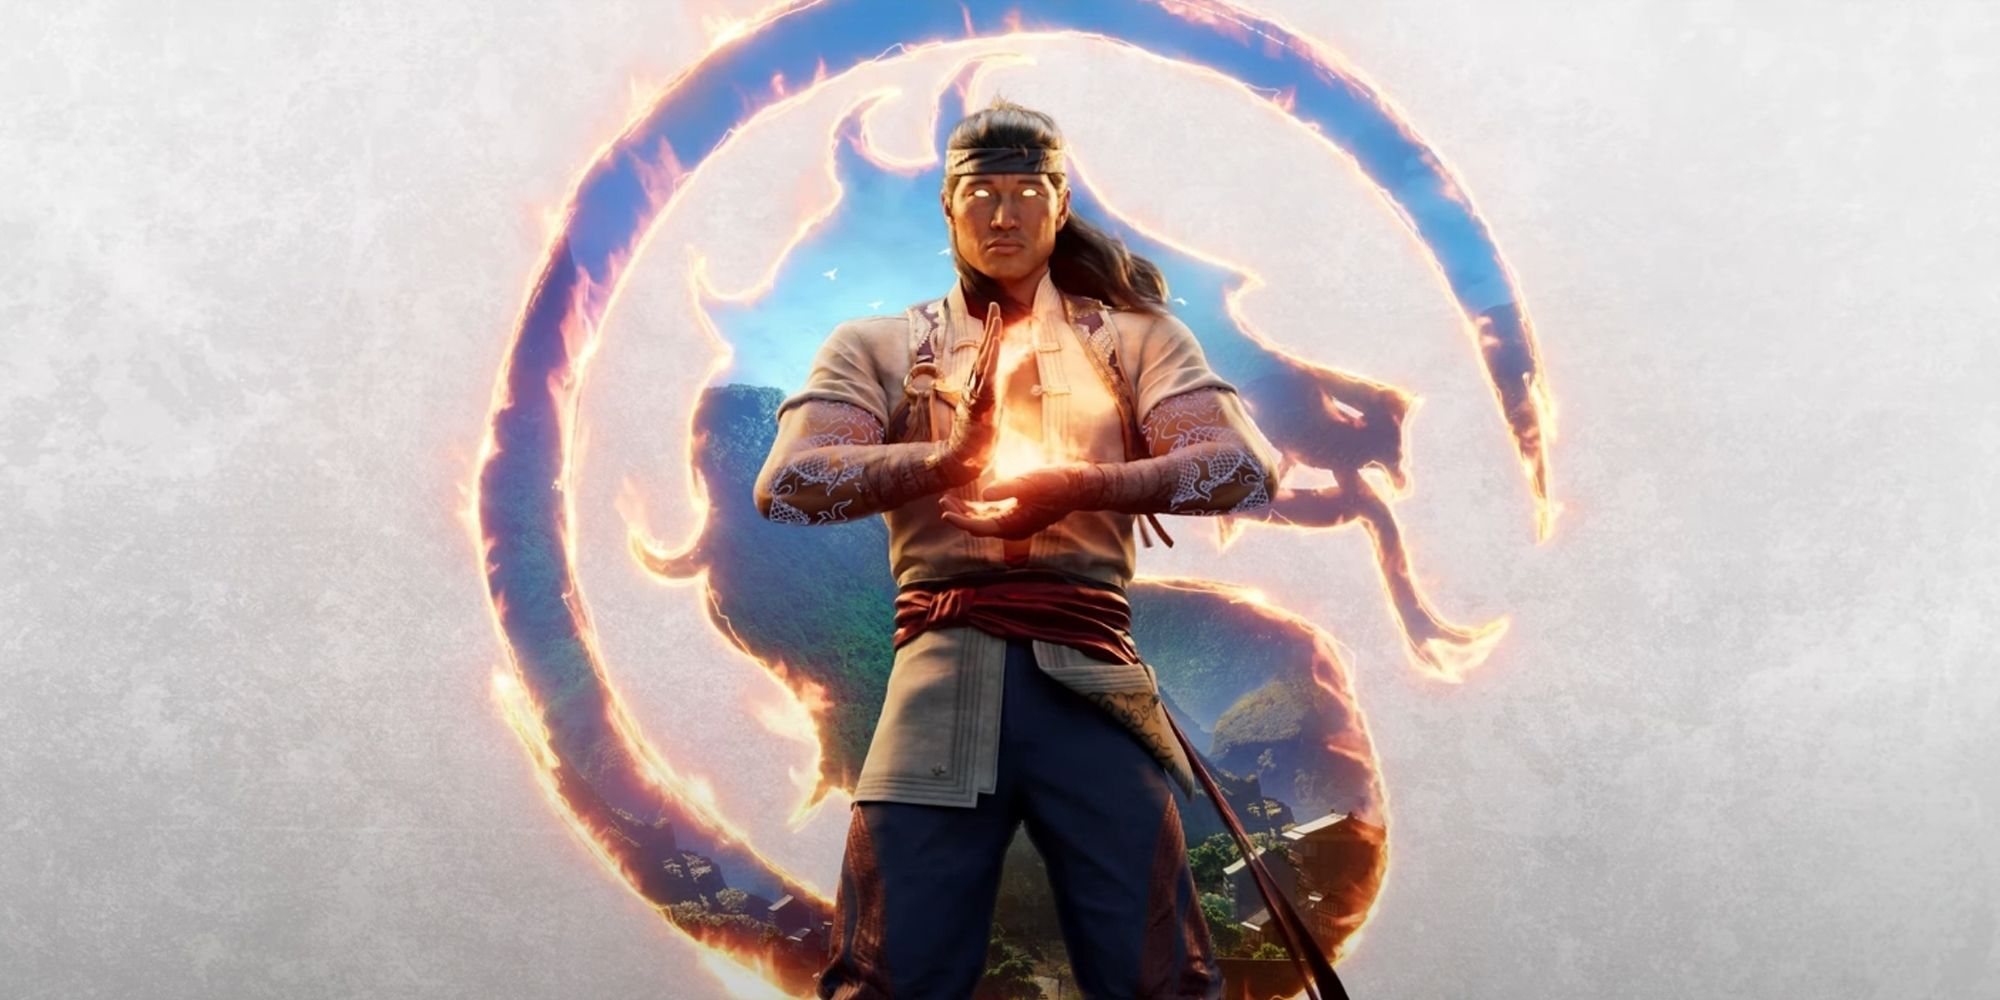 Mortal Kombat 1 Fire God Liu Kang standing over the new logo, now burning